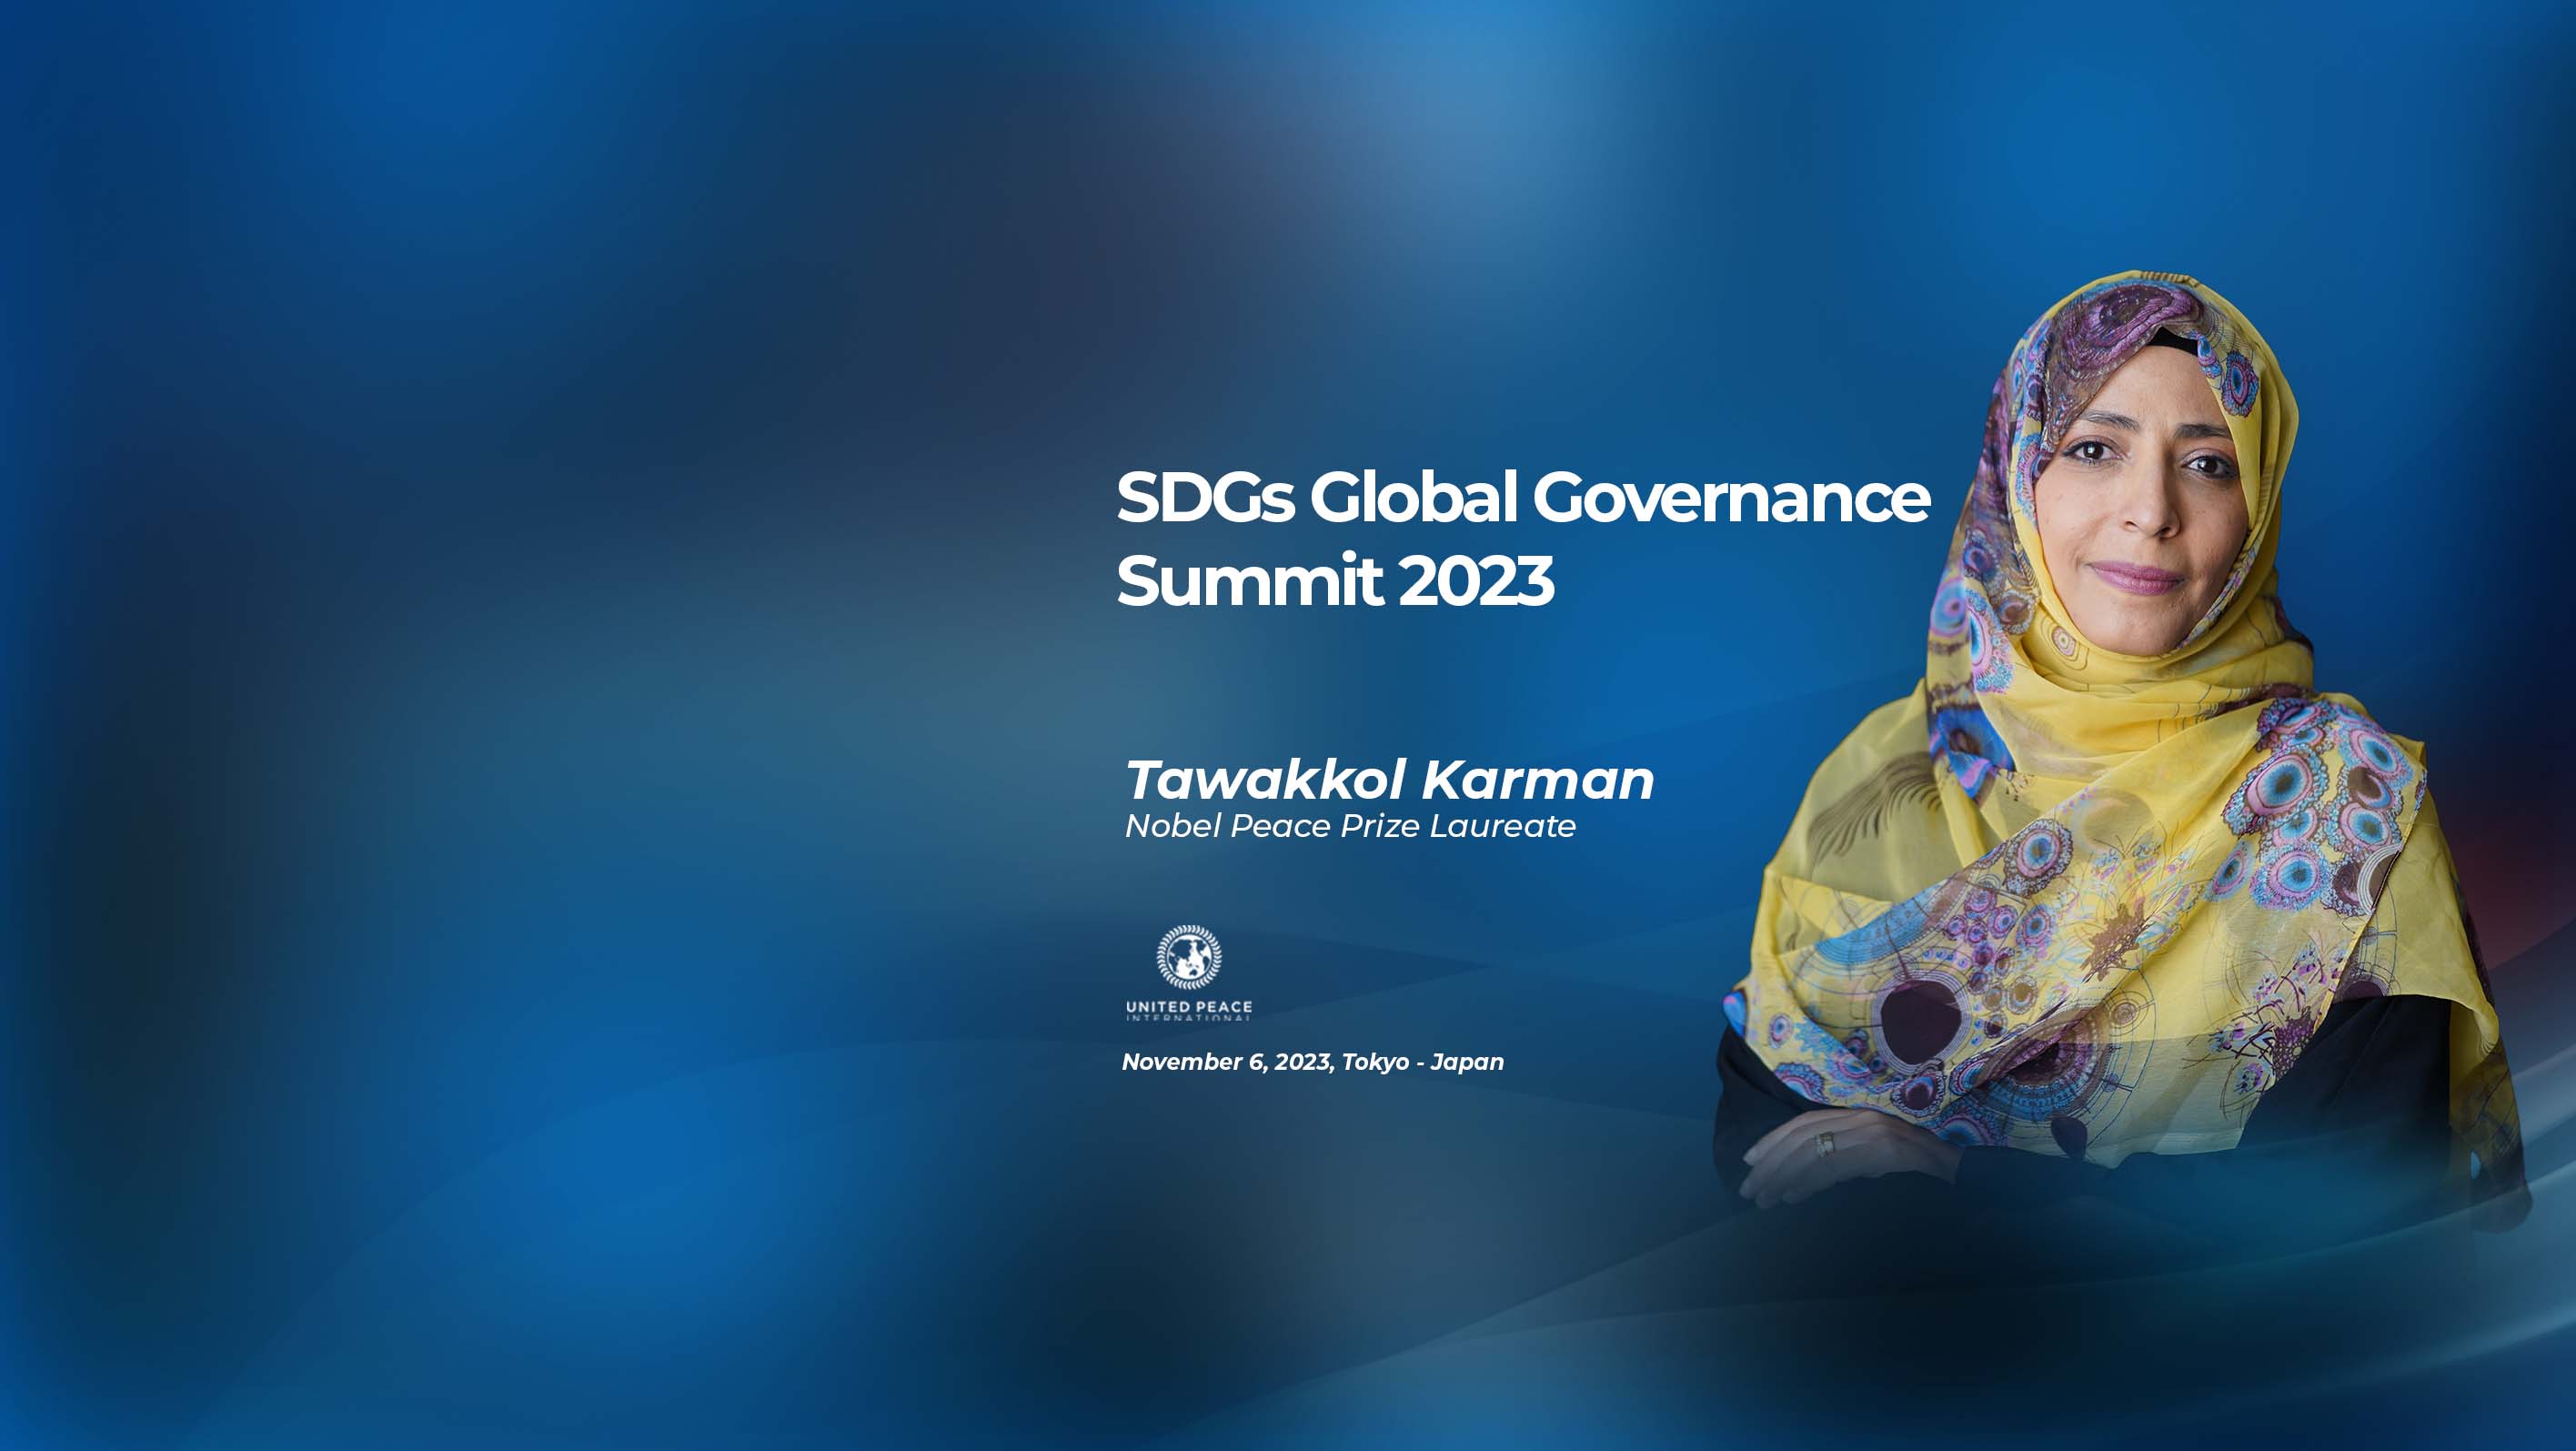 Nobel laureate to speak at Tokyo's global governance summit on SDGs